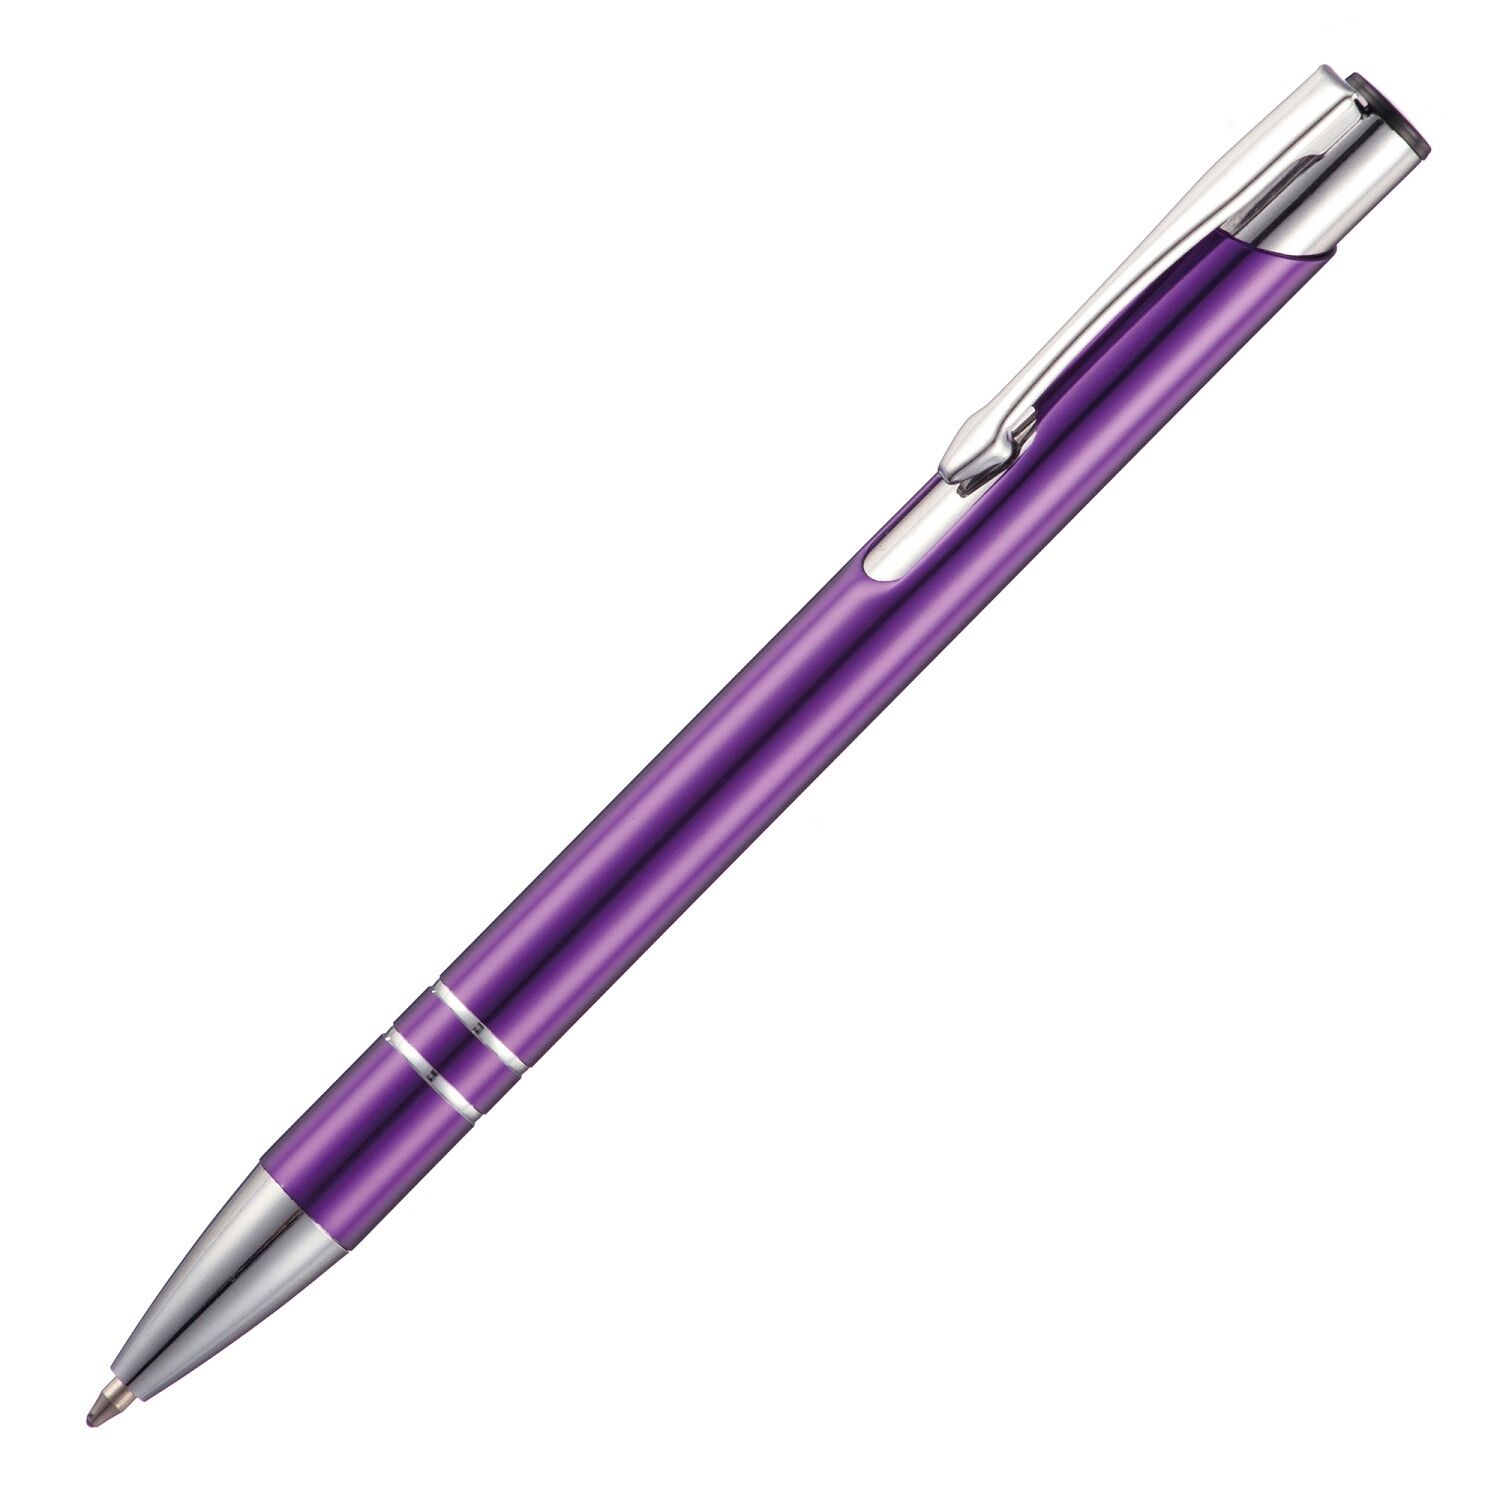 Budget Metal Push Button Pen in Purple